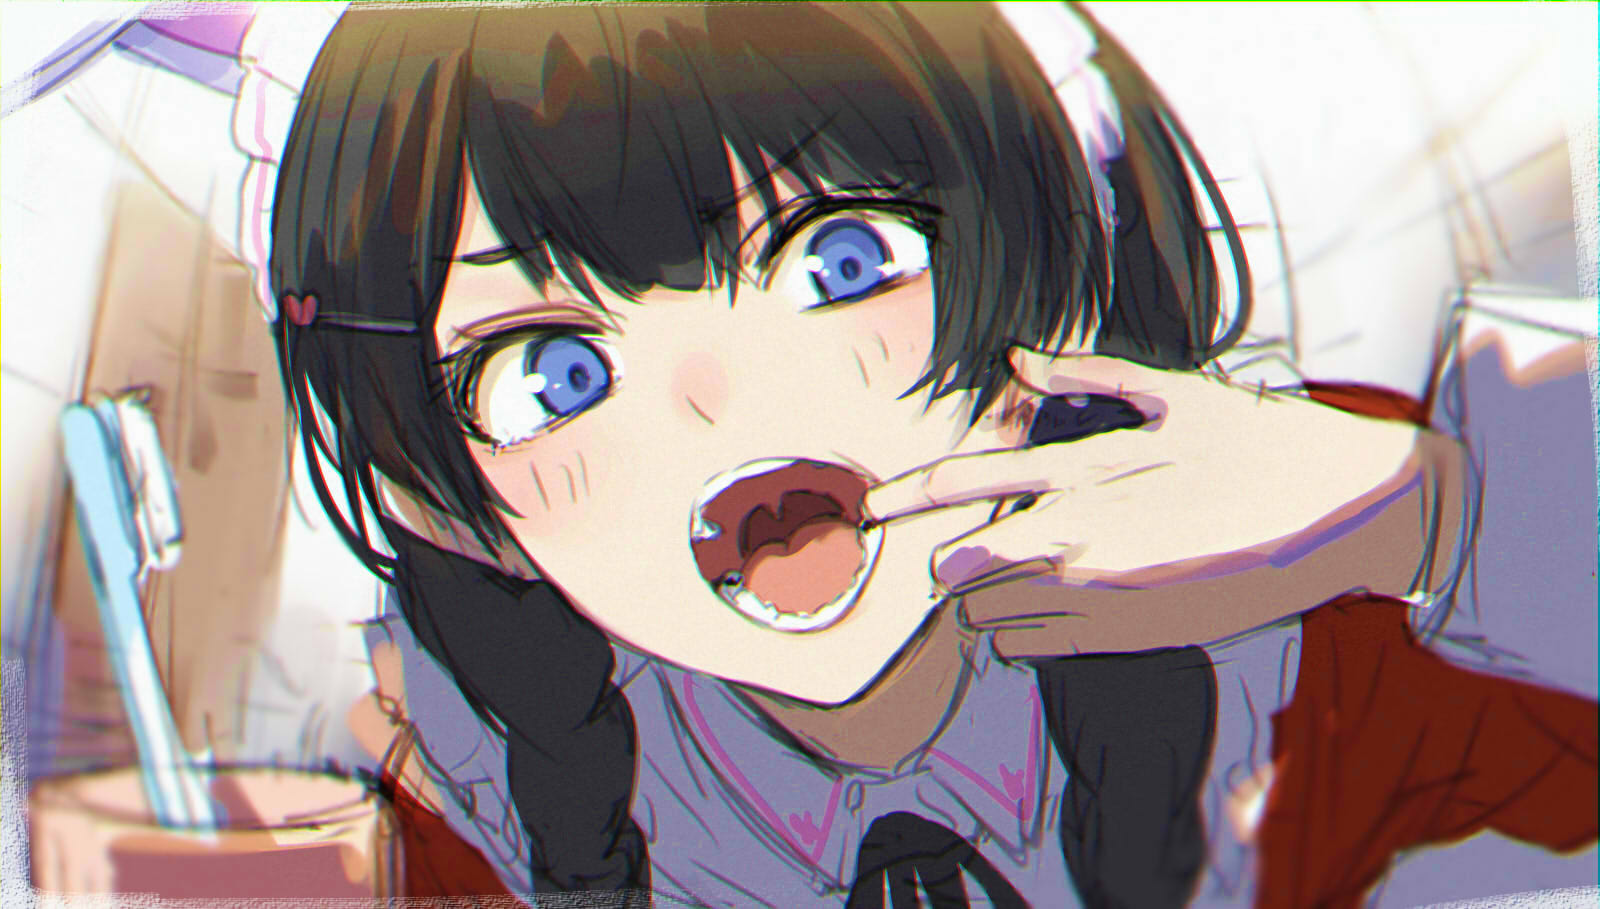 Anime 1600x909 anime anime girls digital art artwork 2D portrait Isshiki black hair blue eyes open mouth reflection teeth tongues Nijisanji Tsukino Mito